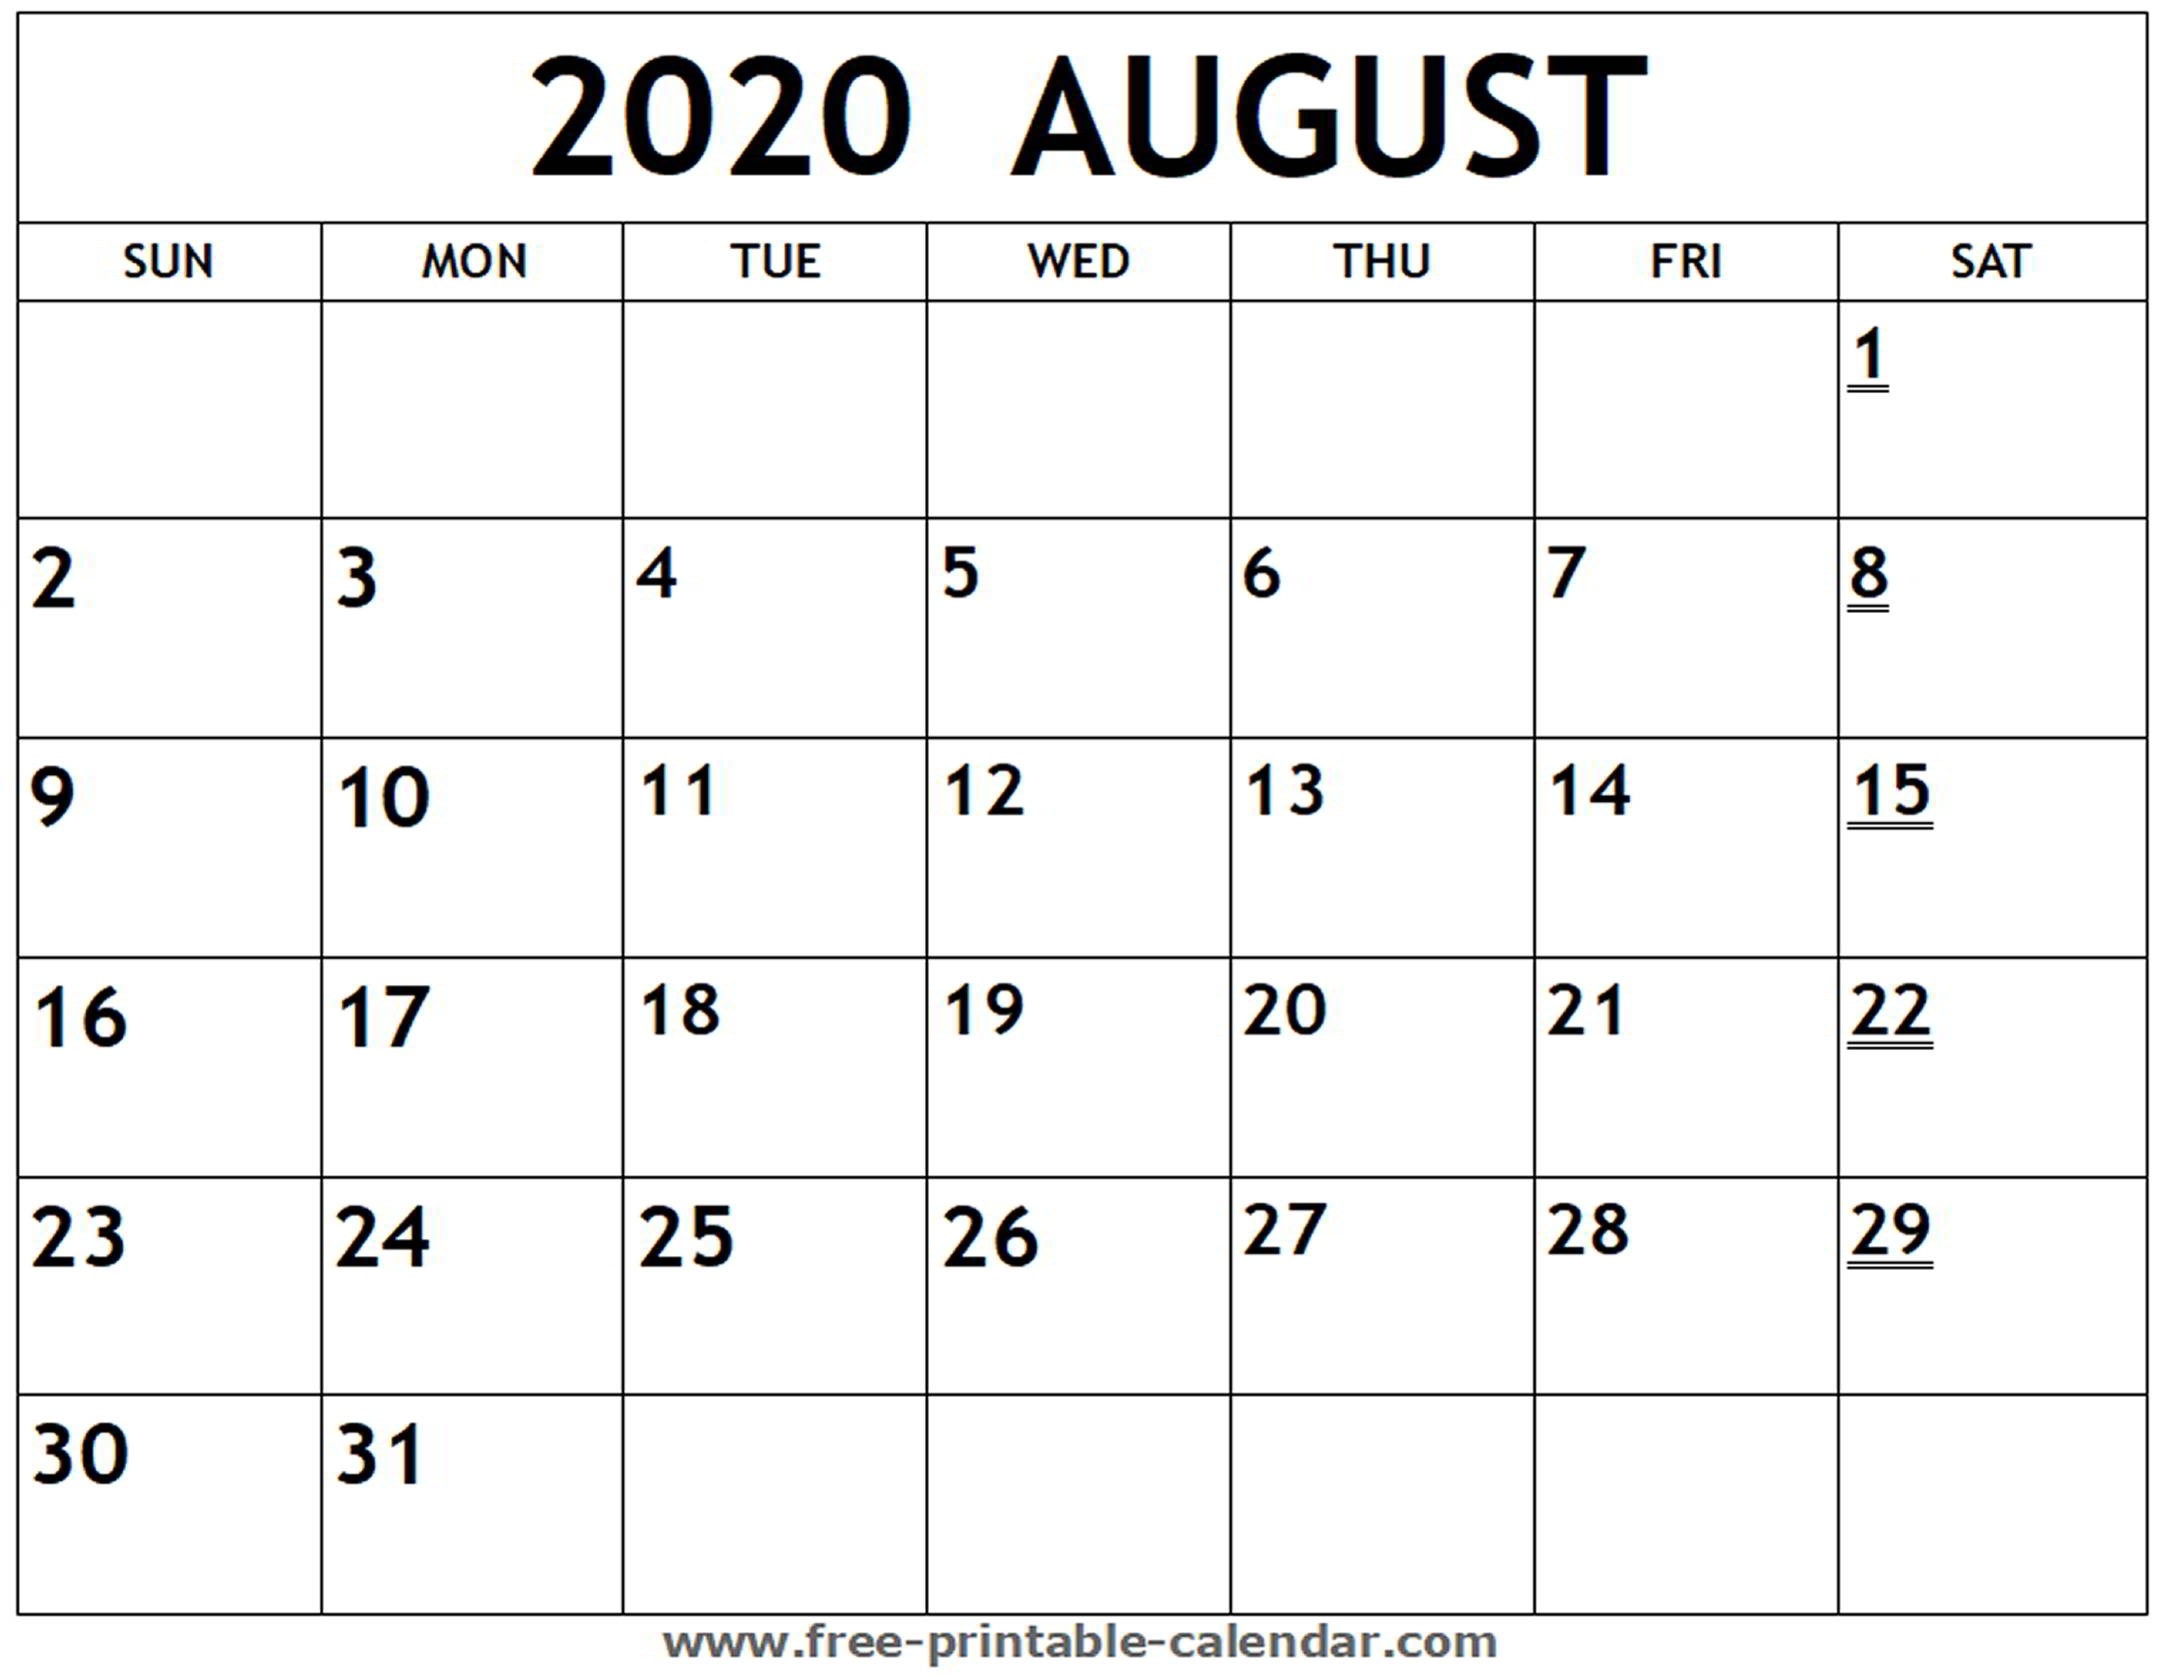 Printable 2020 August Calendar - Free-Printable-Calendar  Calendar Printable 2020